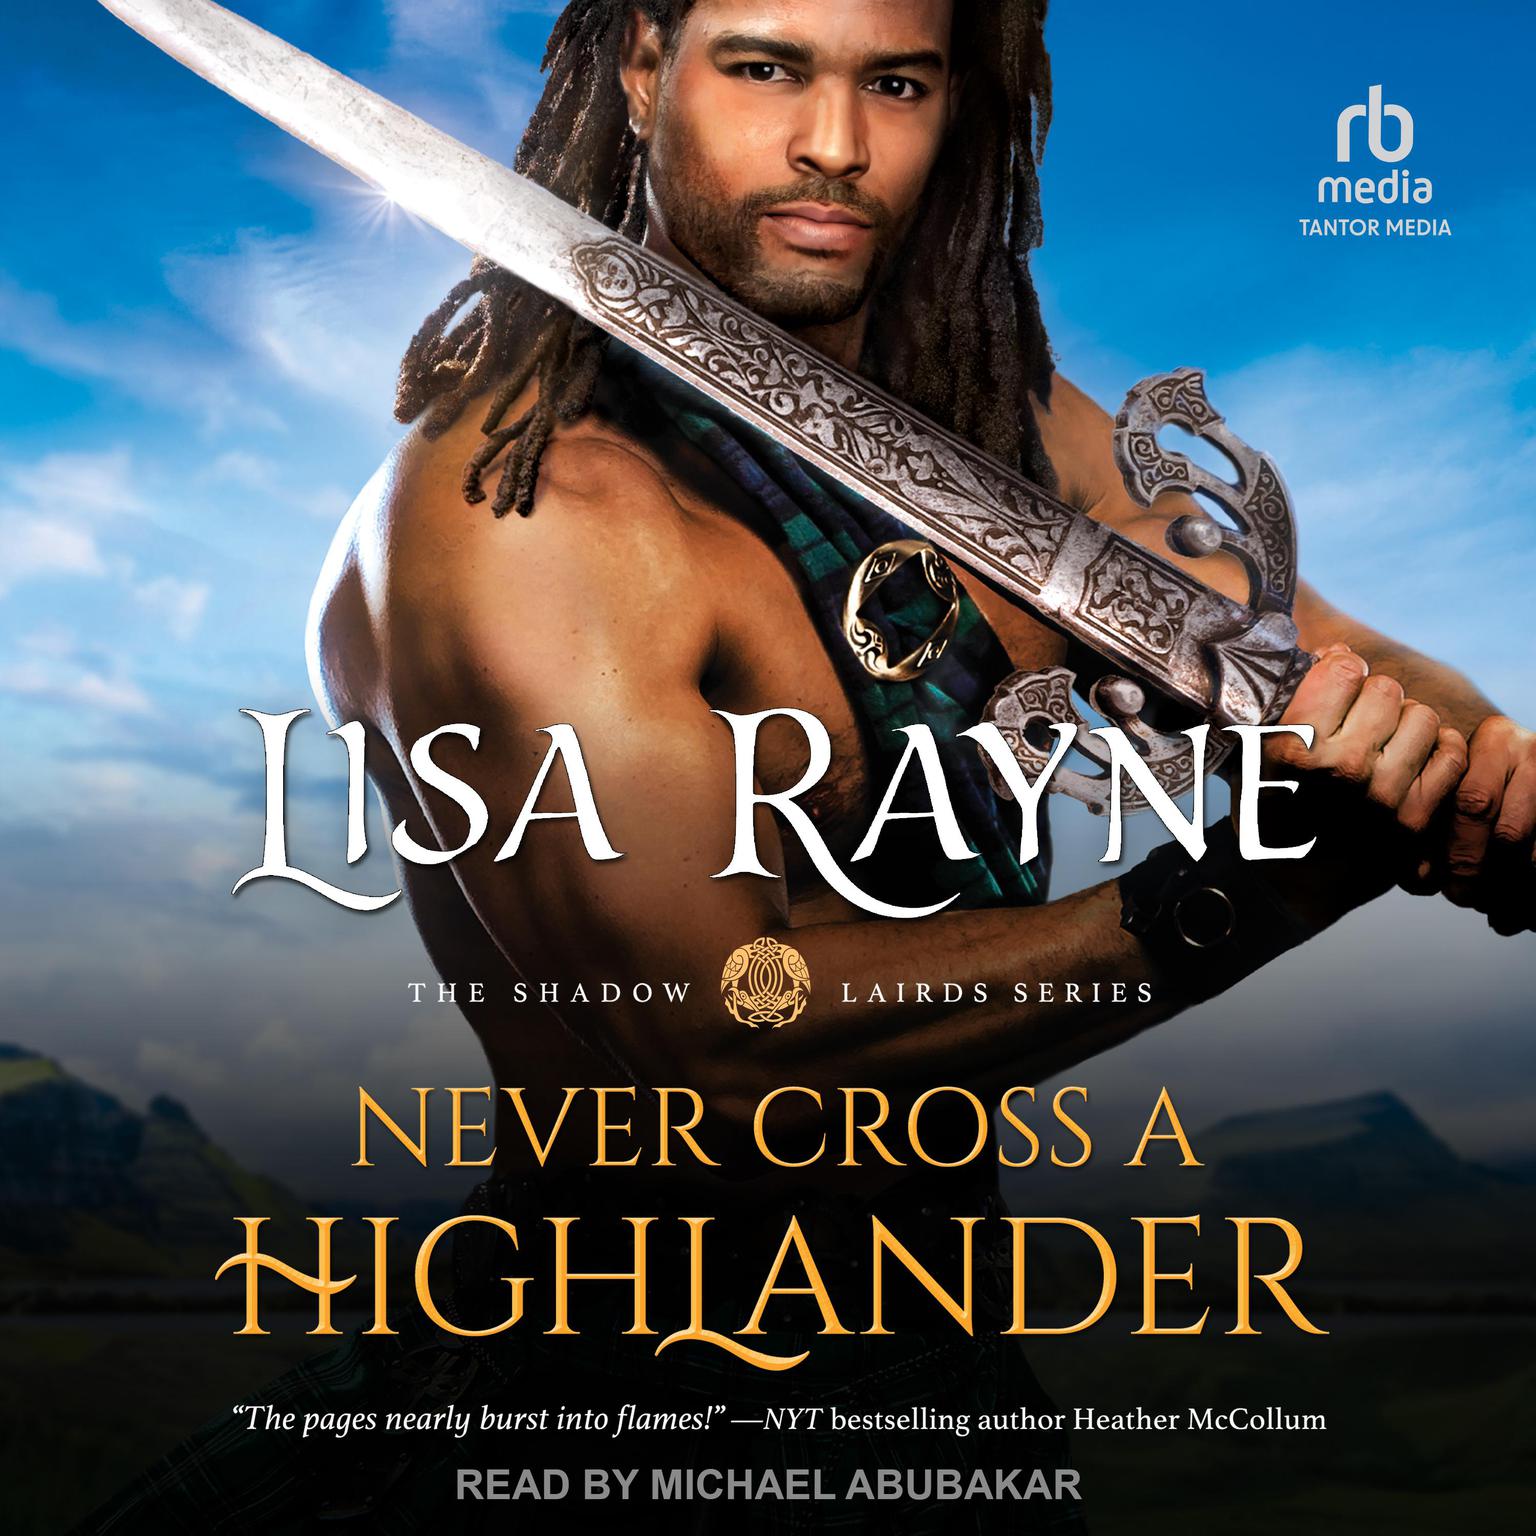 Never Cross a Highlander Audiobook, by Lisa Rayne